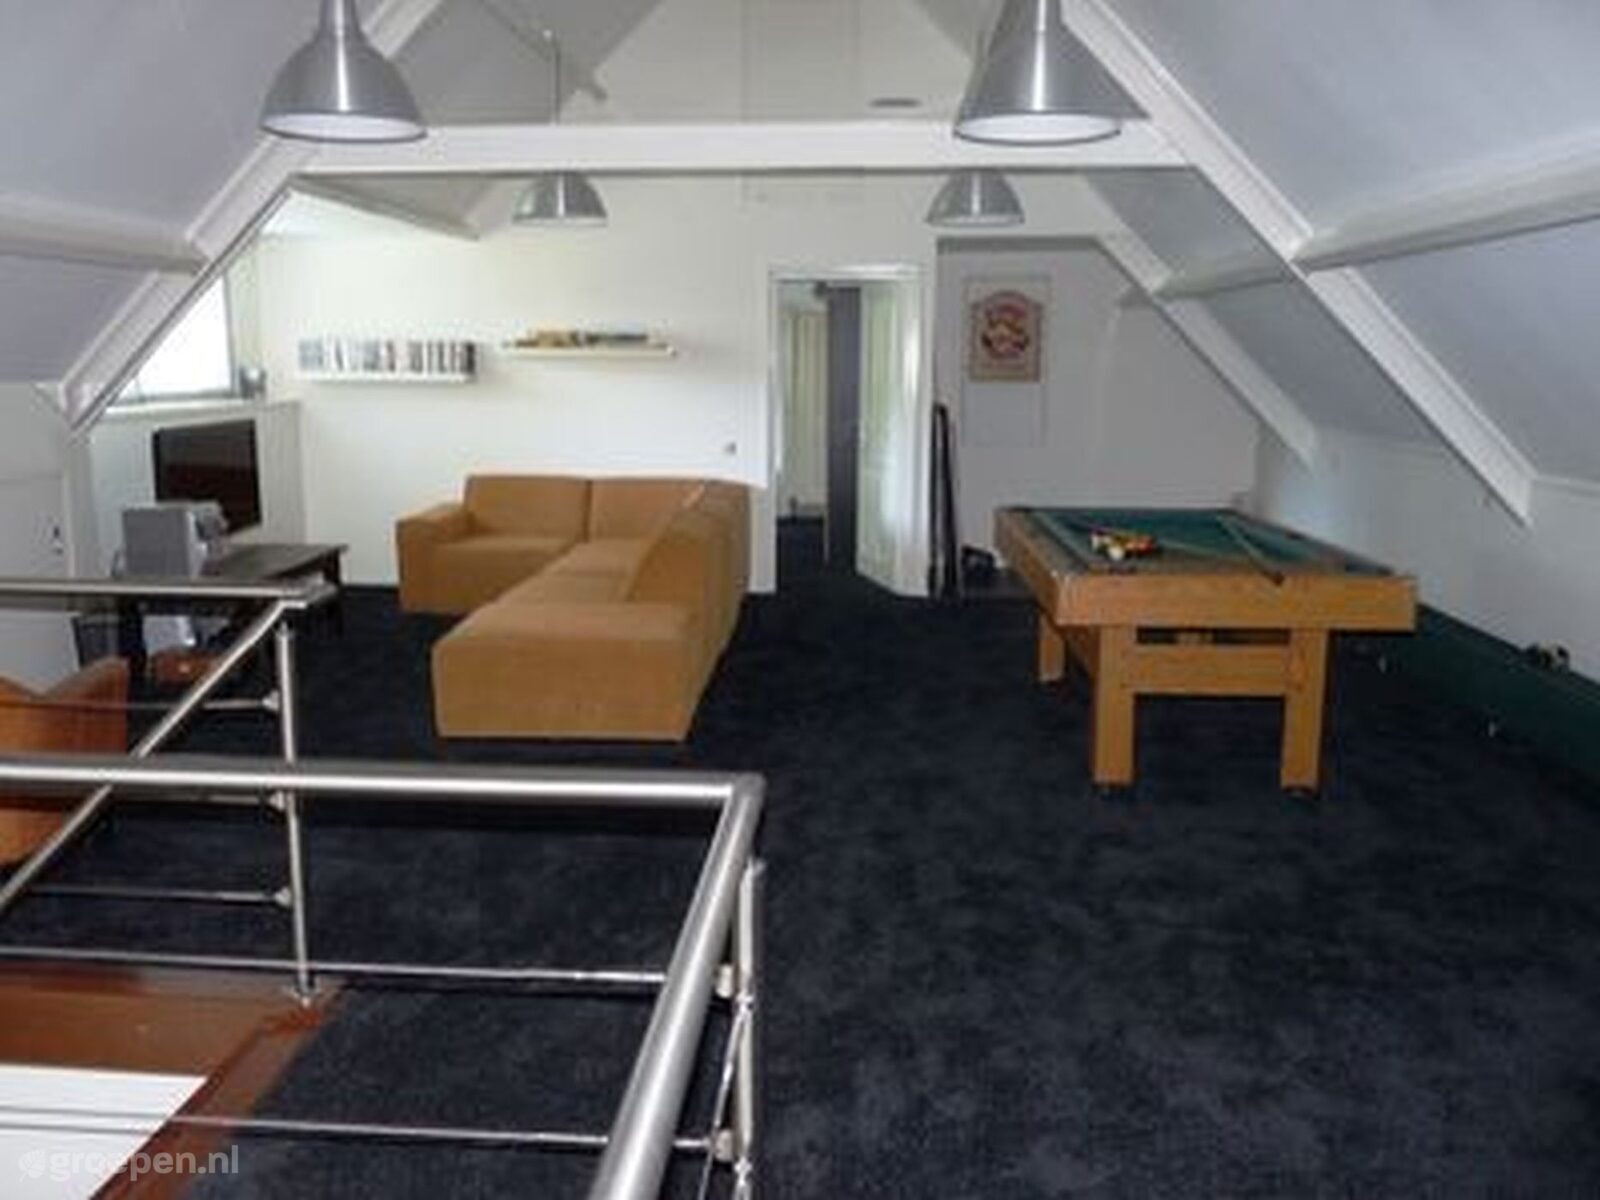 Group accommodation Breda